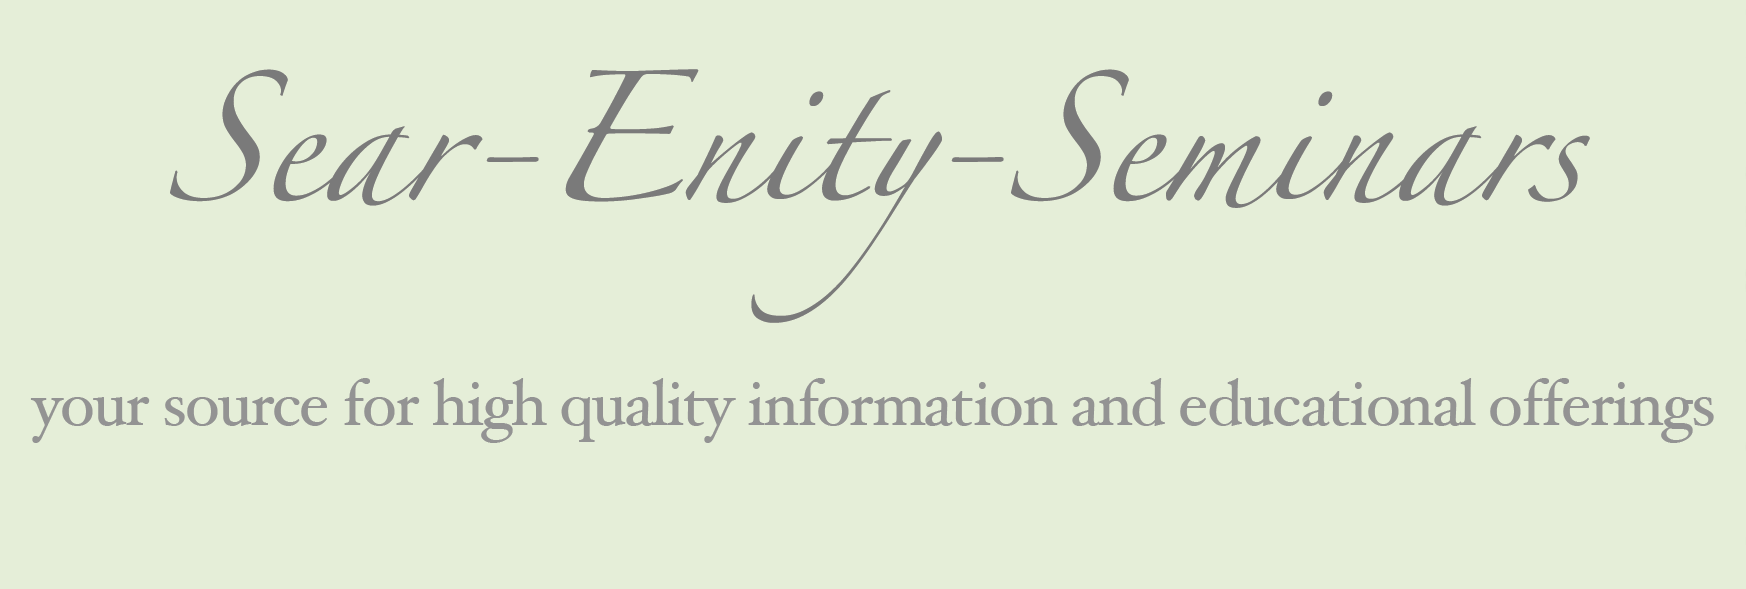 Sear-Enity Seminars logo